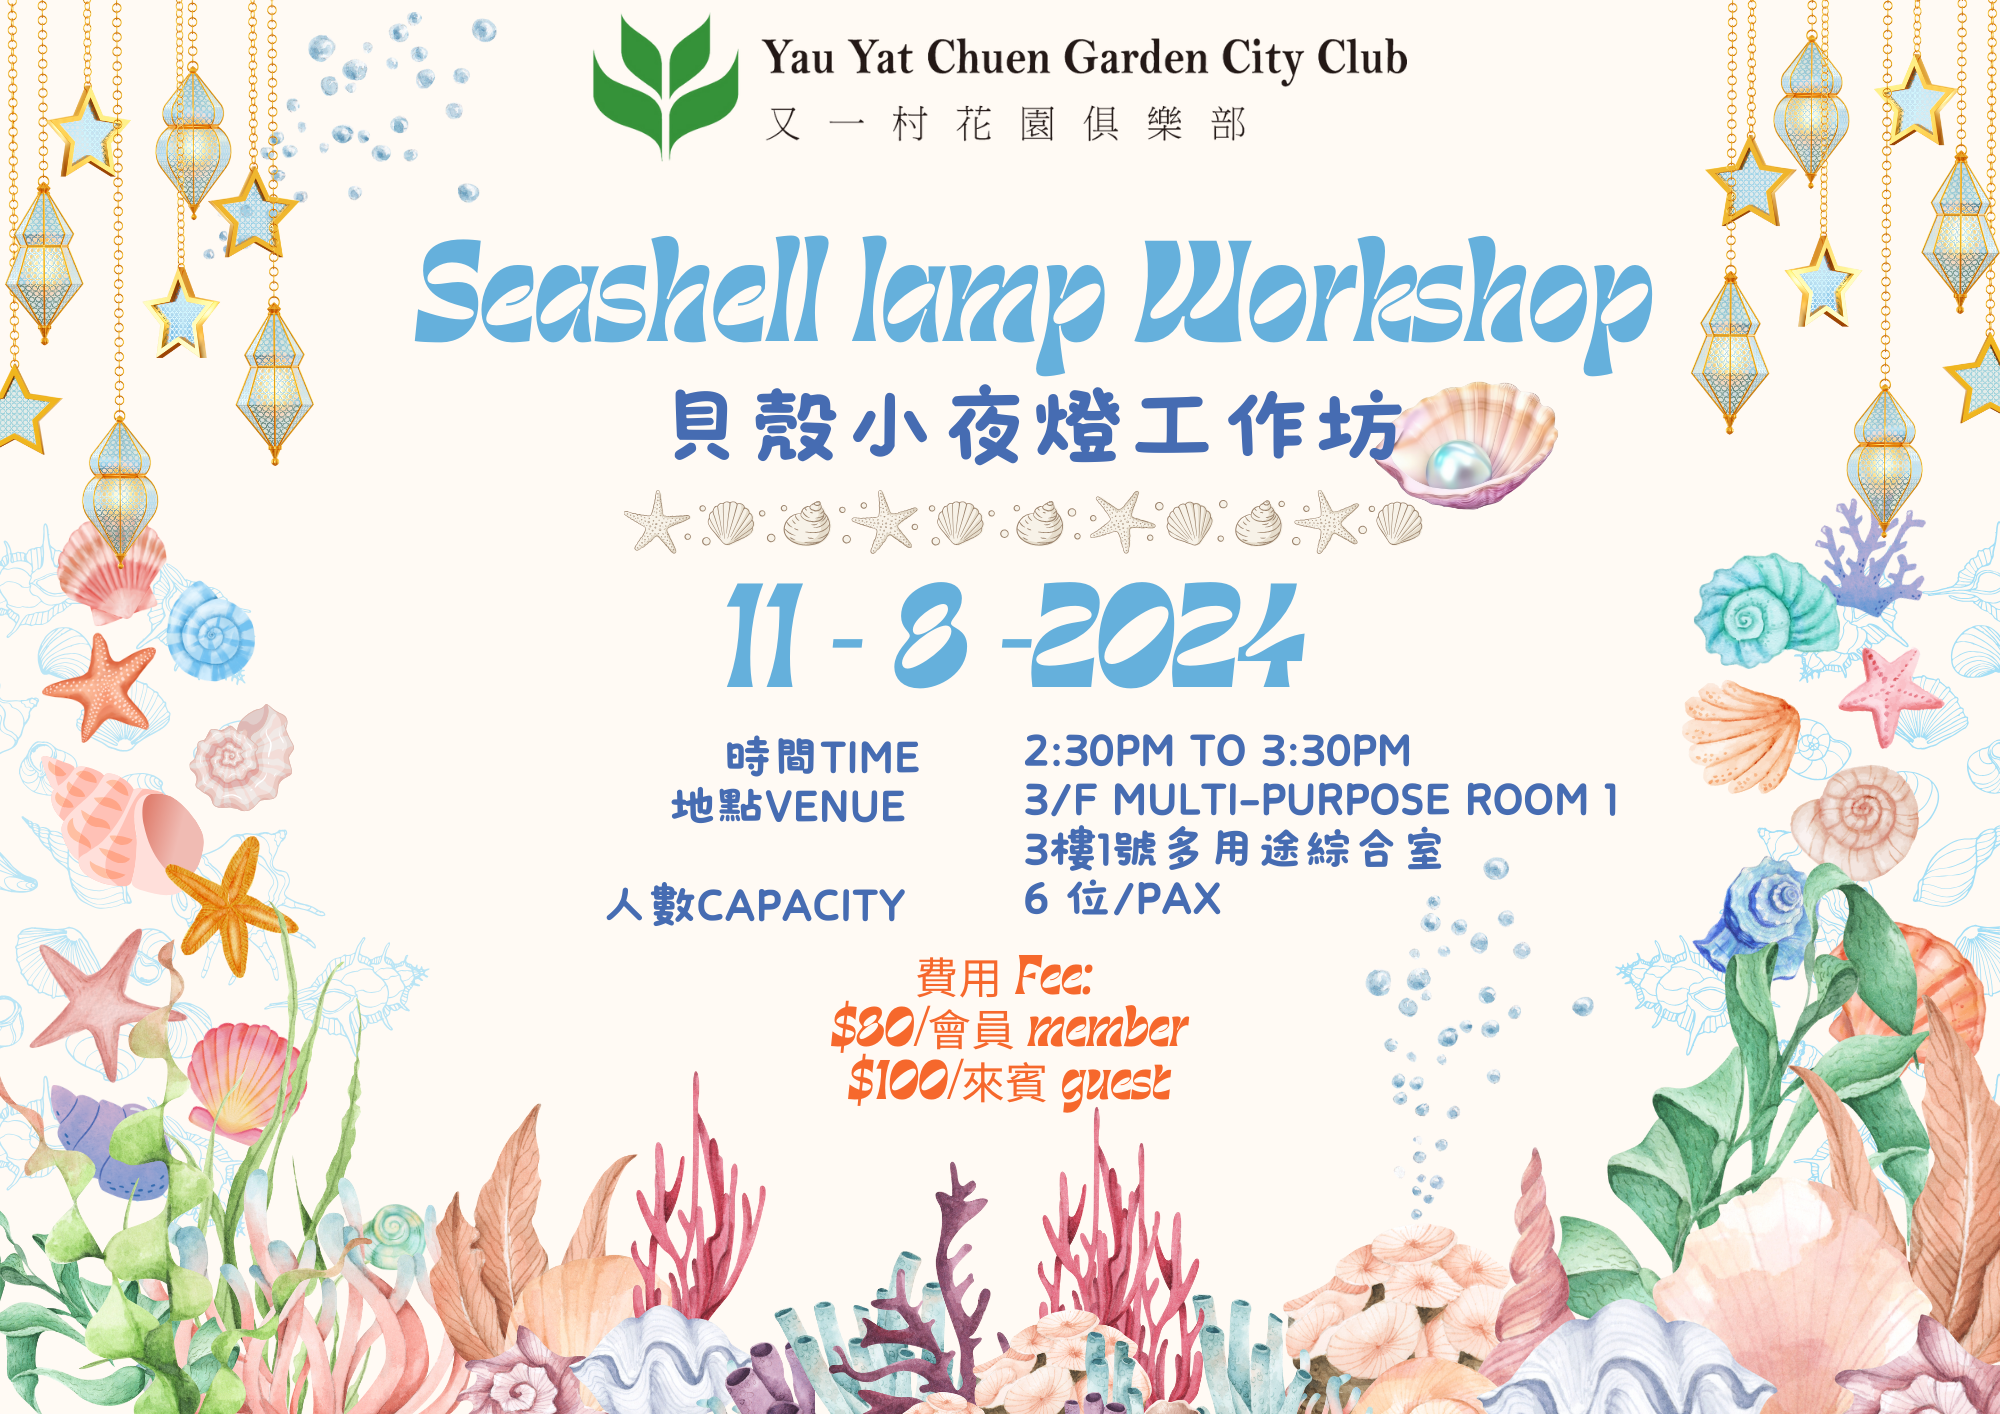 Seashell lamp workshop